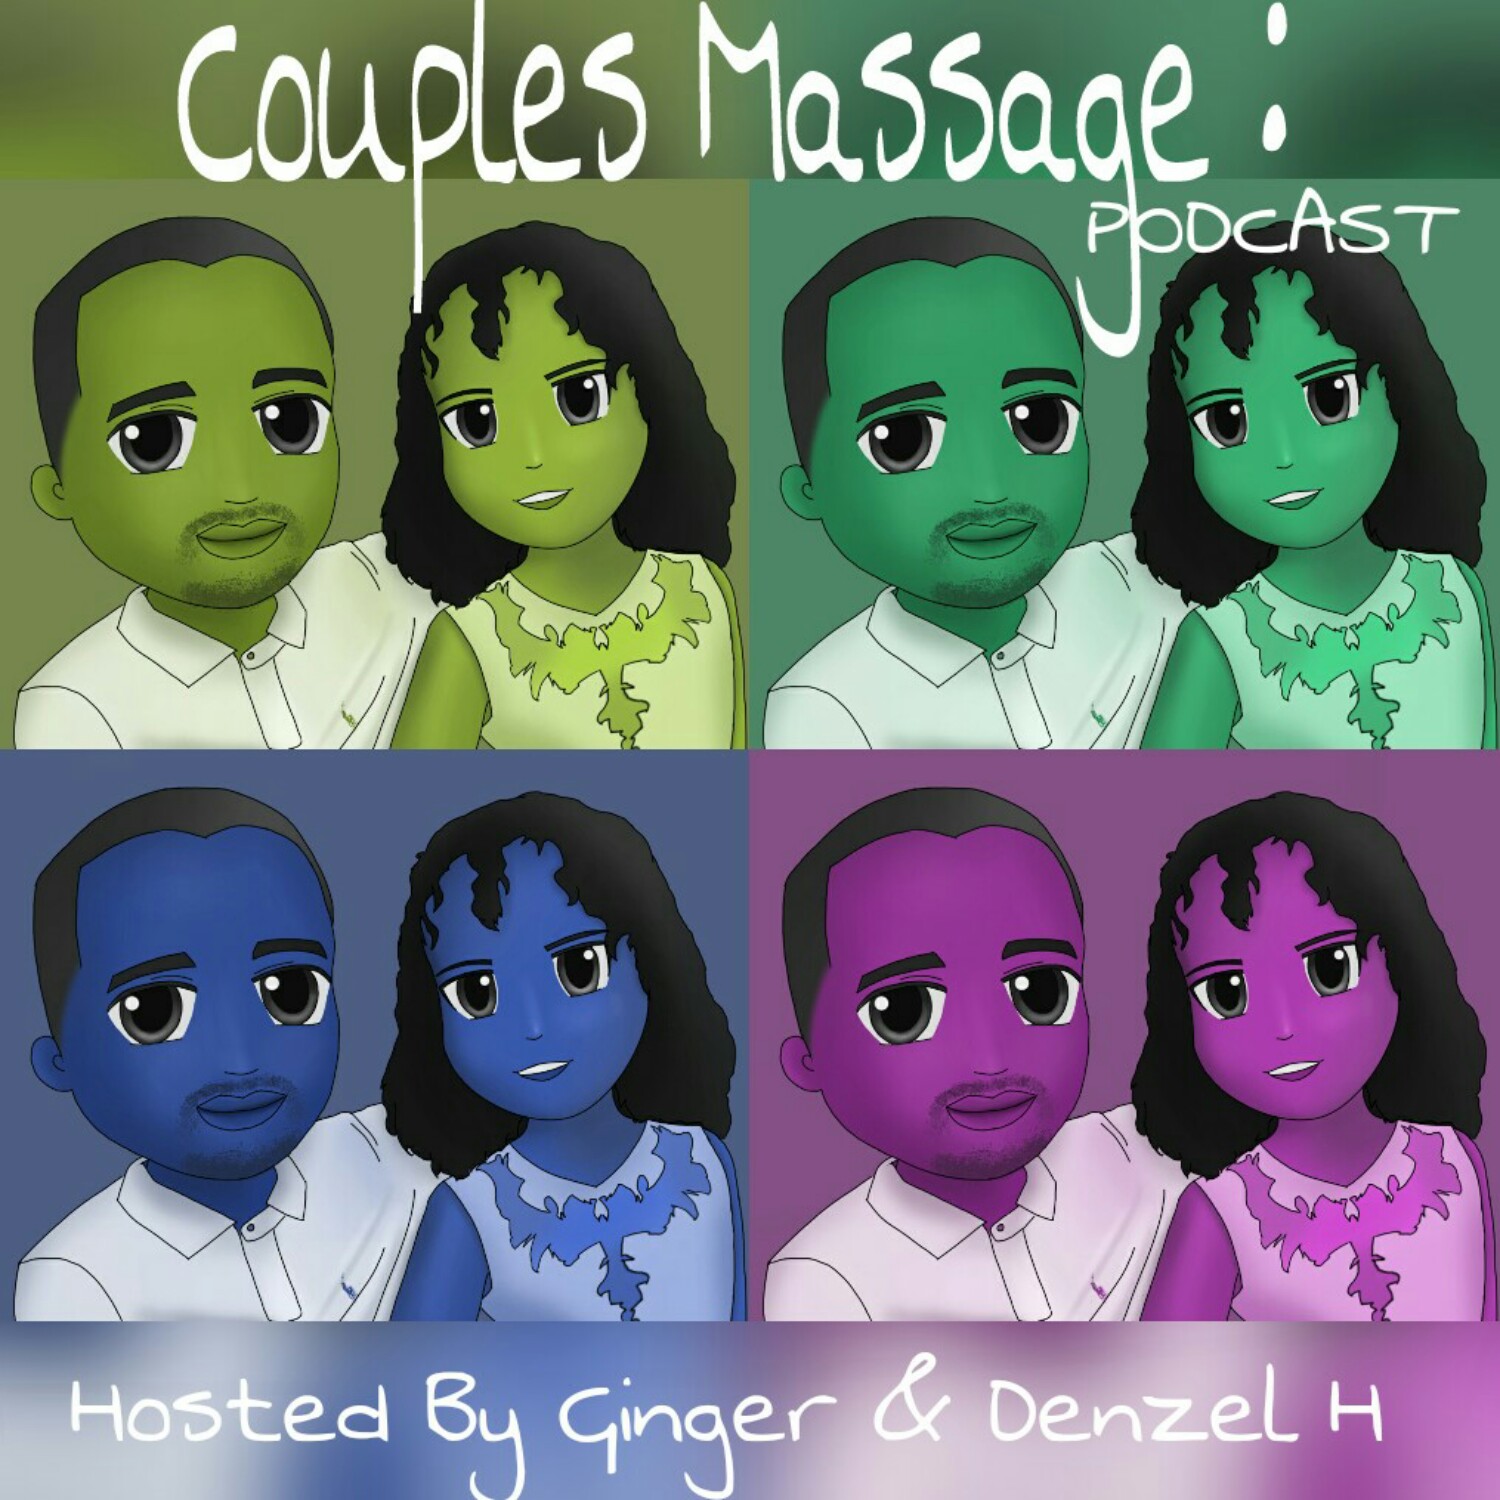 Couples Massage Podcast: